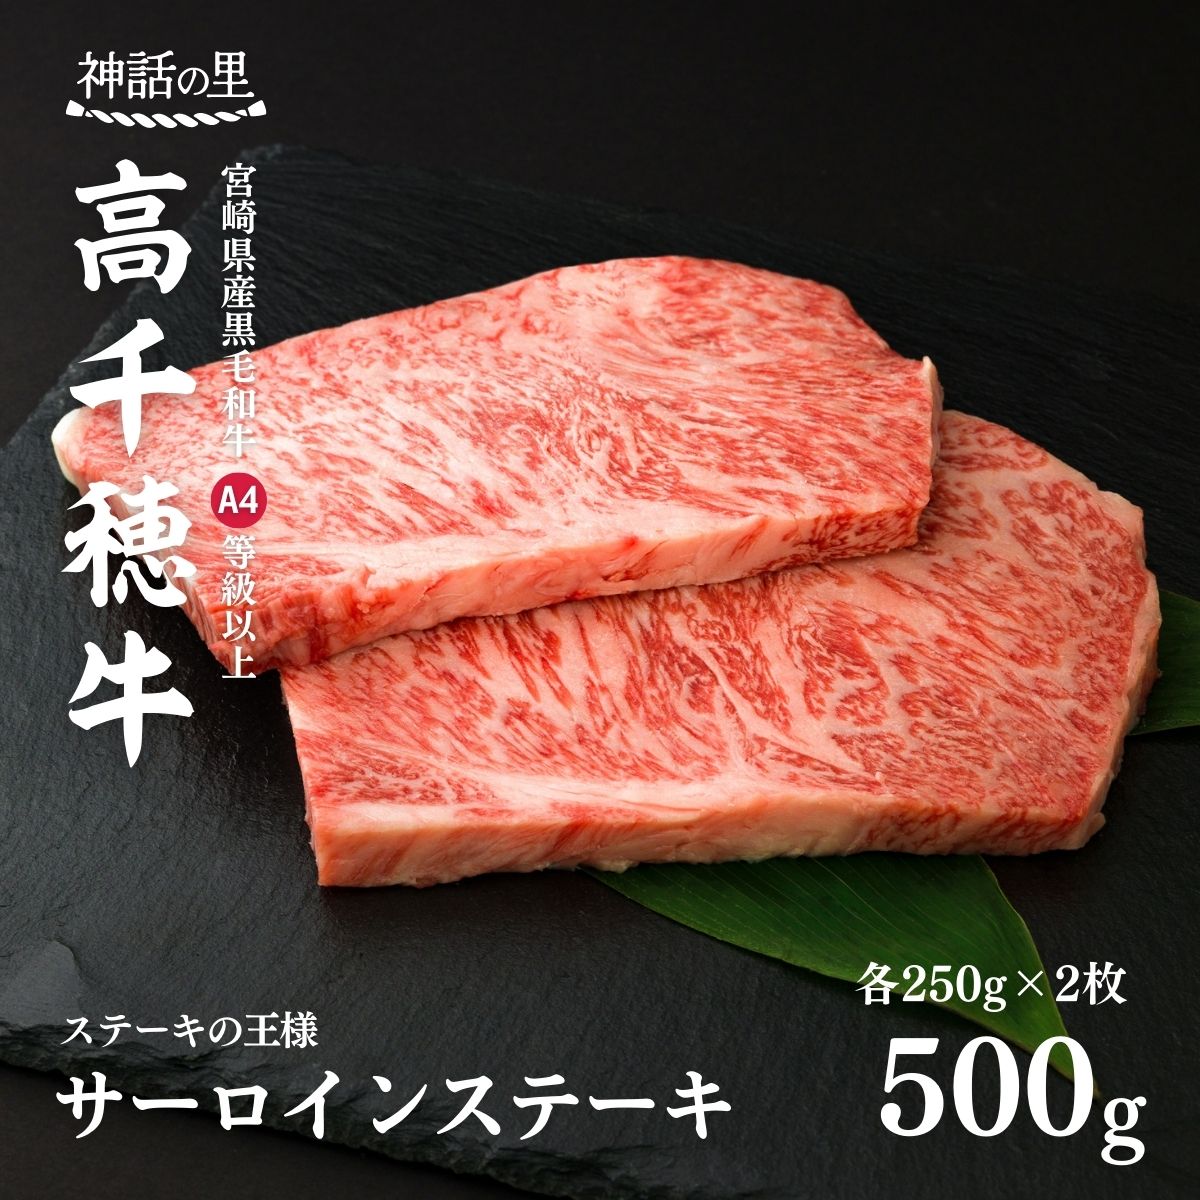 宮崎県産黒毛和牛A4等級以上 高千穂牛サーロインステーキ 250g×2枚 計500g A1